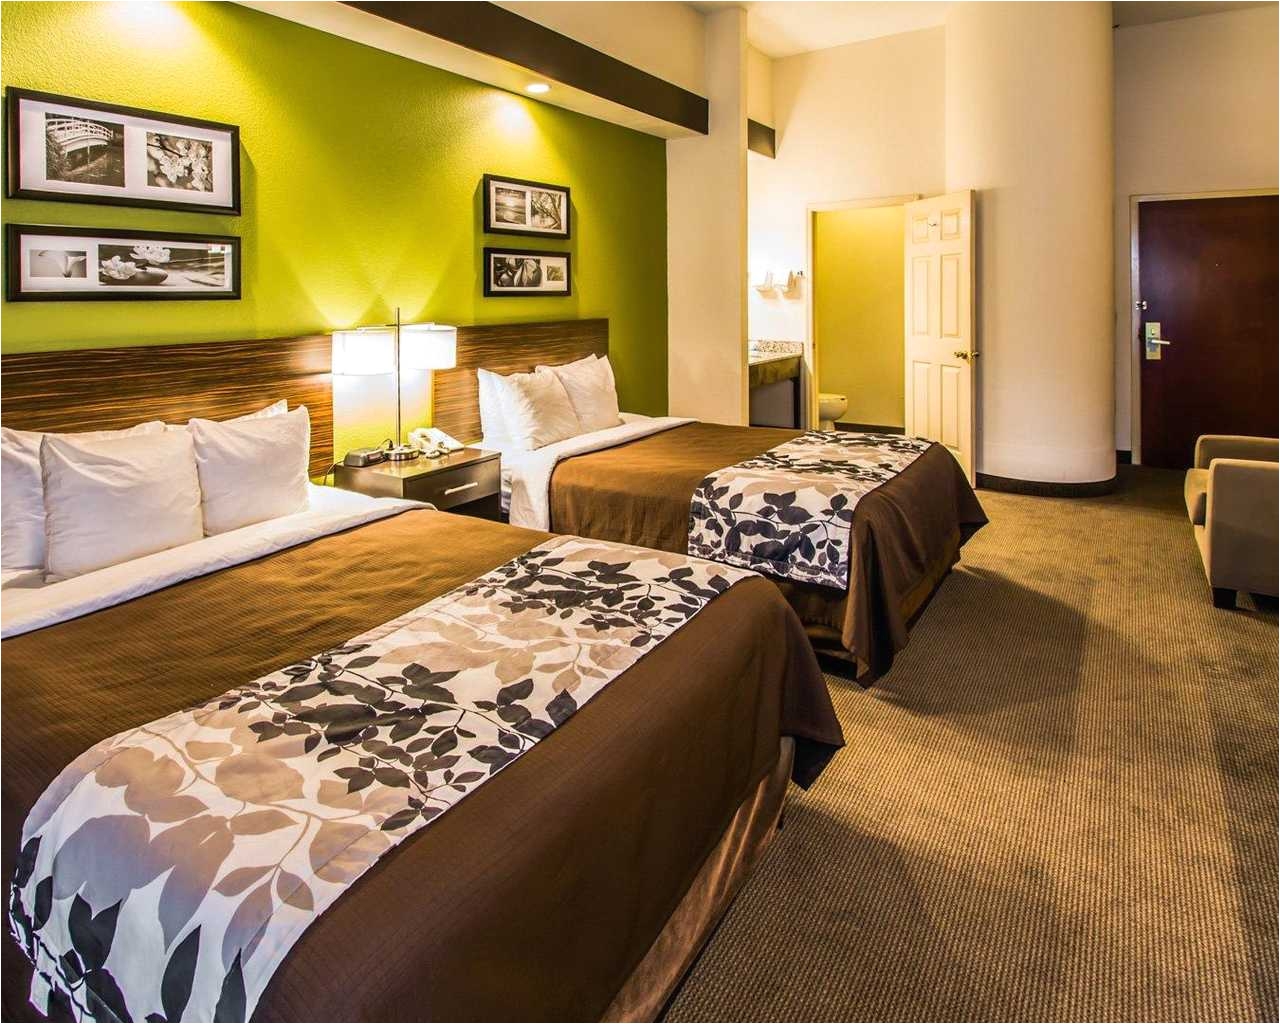 Hotels with 2 Bedroom Suites Near Disney World Sleep Inn orlando Airport Fl Near by Seaworld islands Of Adventure